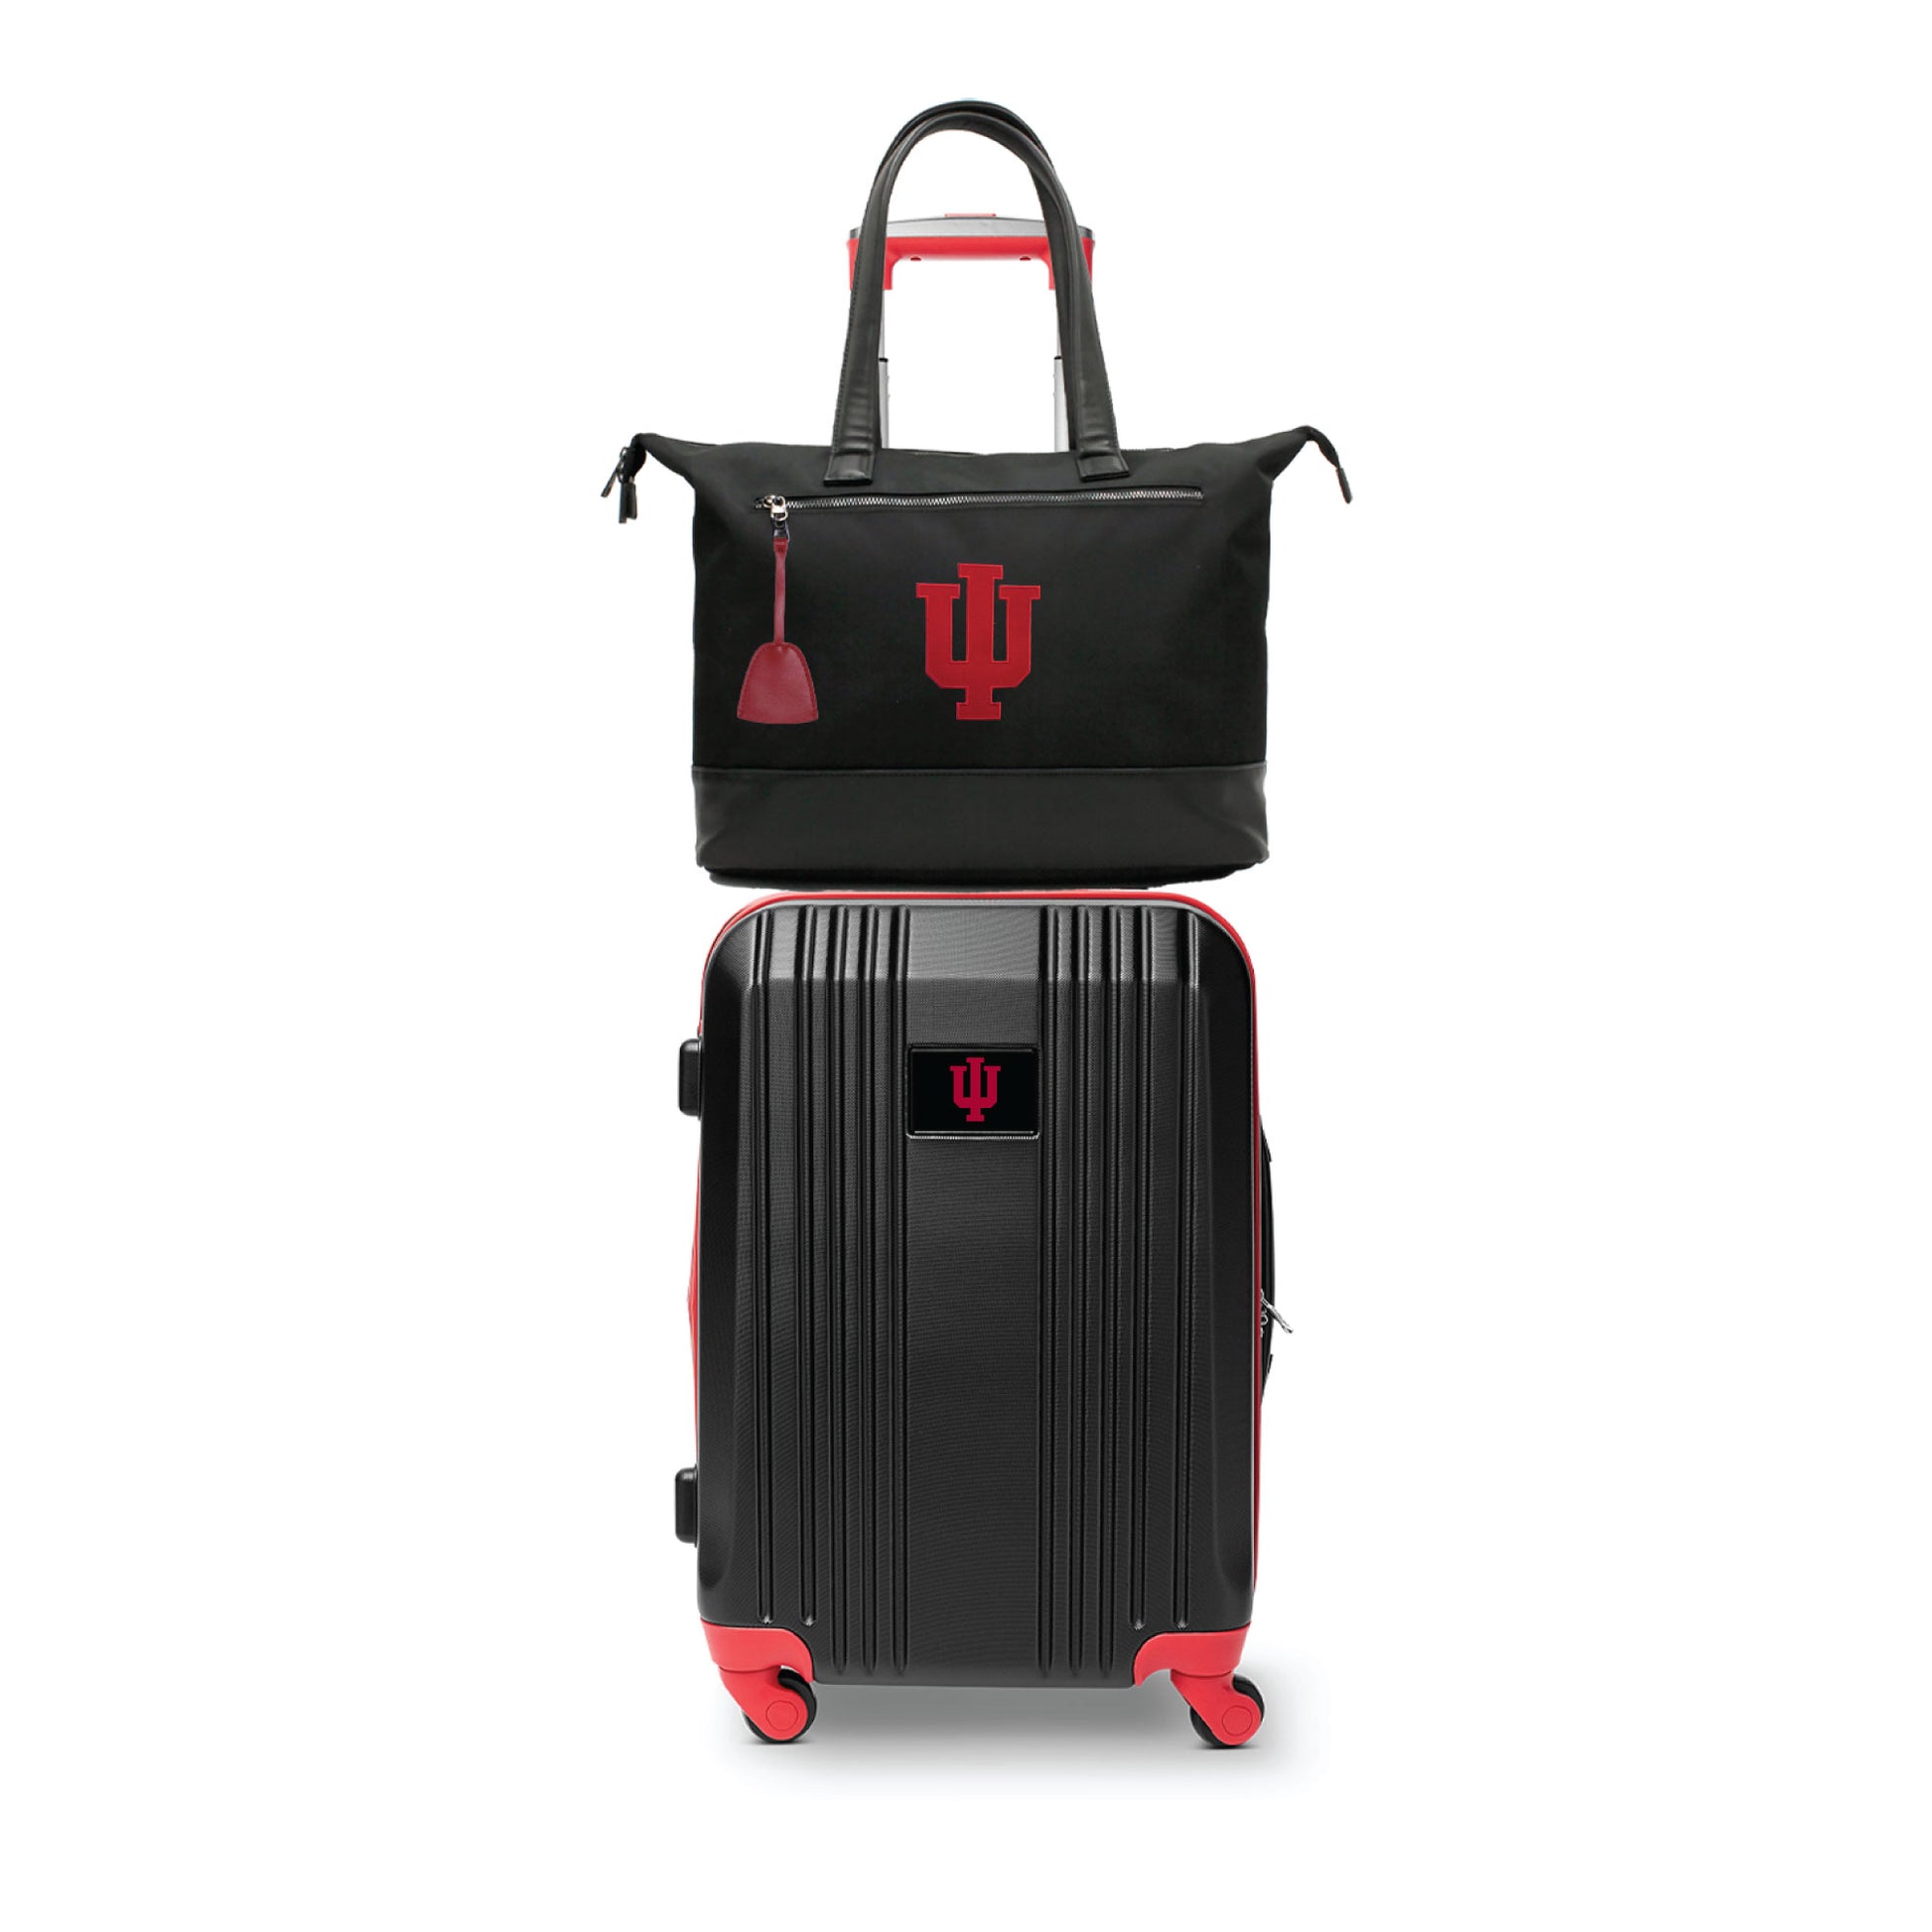 Indiana Hoosiers Premium Laptop Tote Bag and Luggage Set